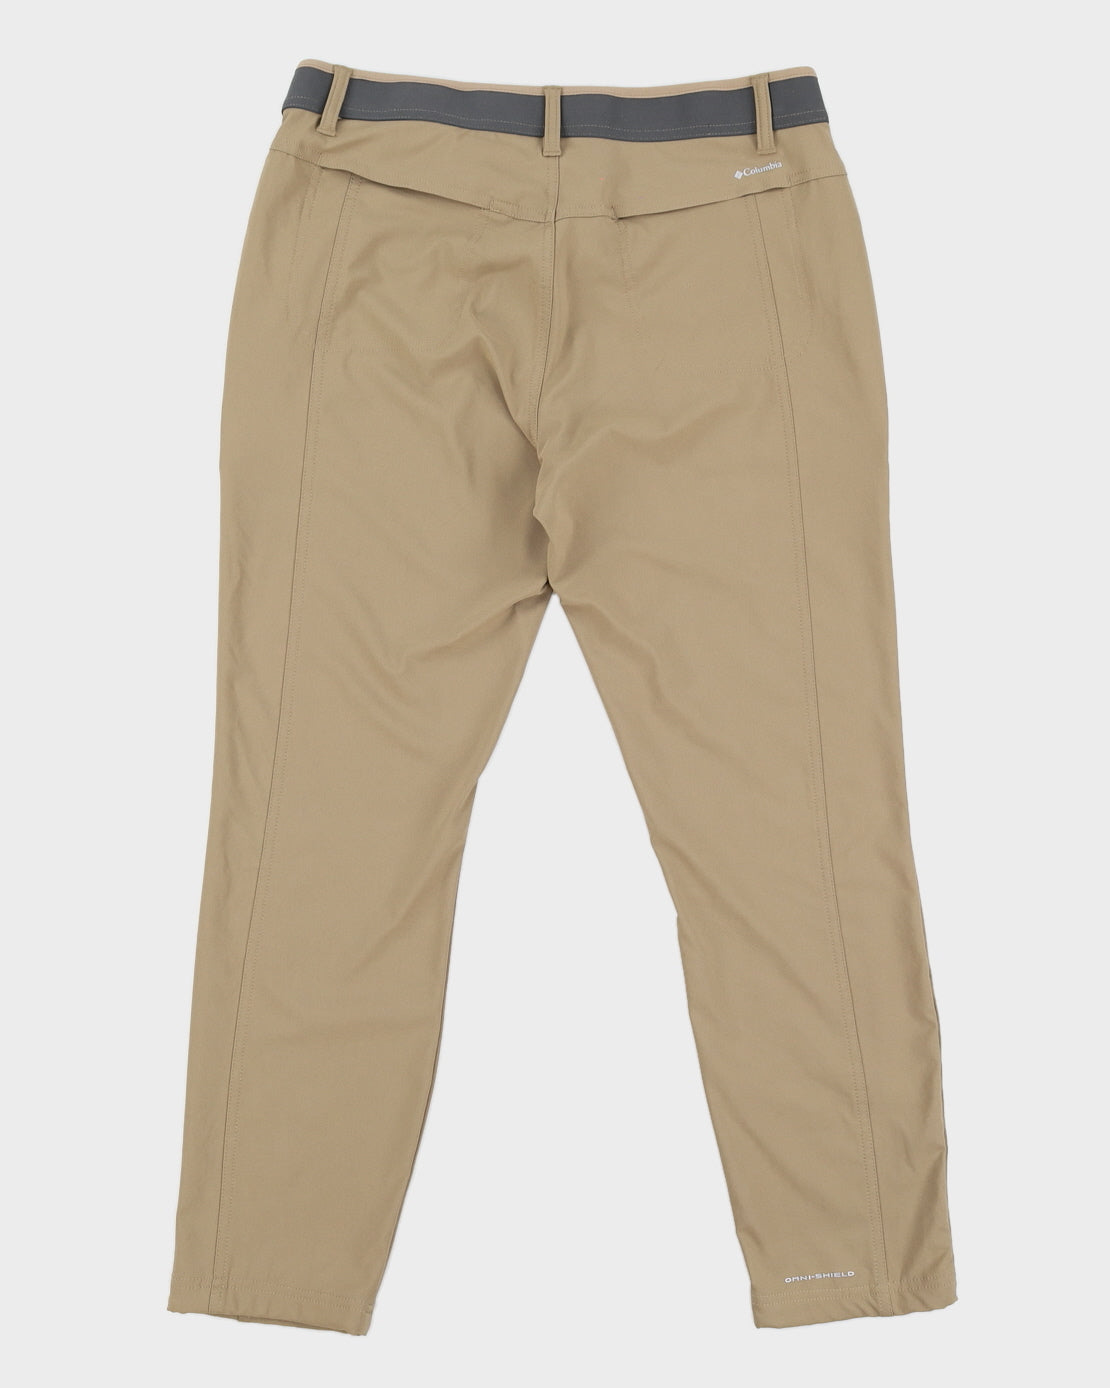 Columbia Men's Brown Hiking Trousers - W 36